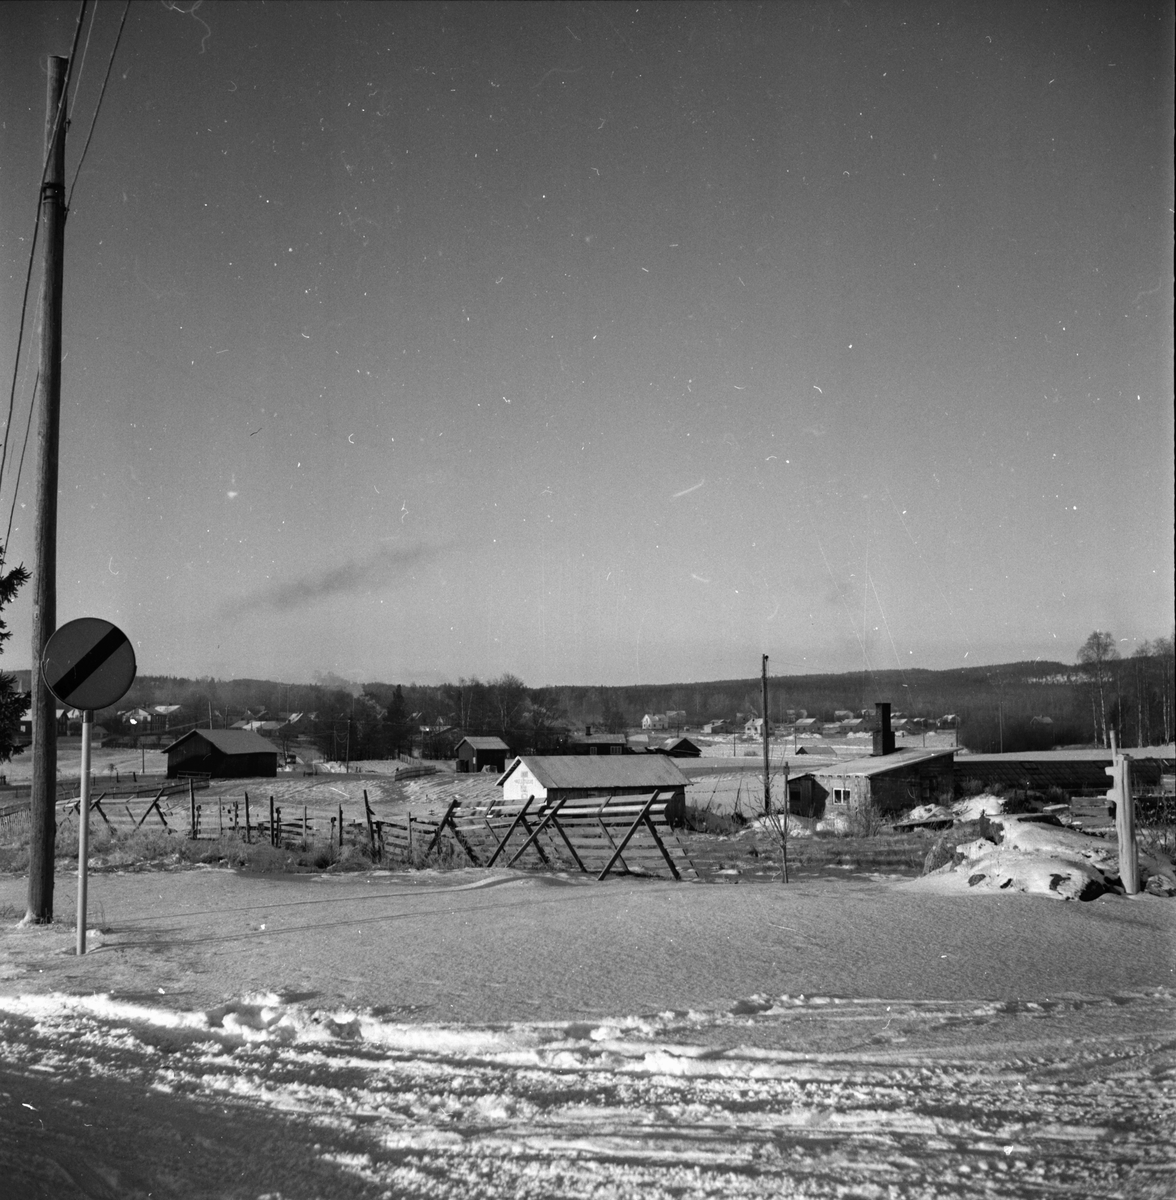 Tidig morgonandakt.
Vinterbilder
Lingbo 14/12 1961